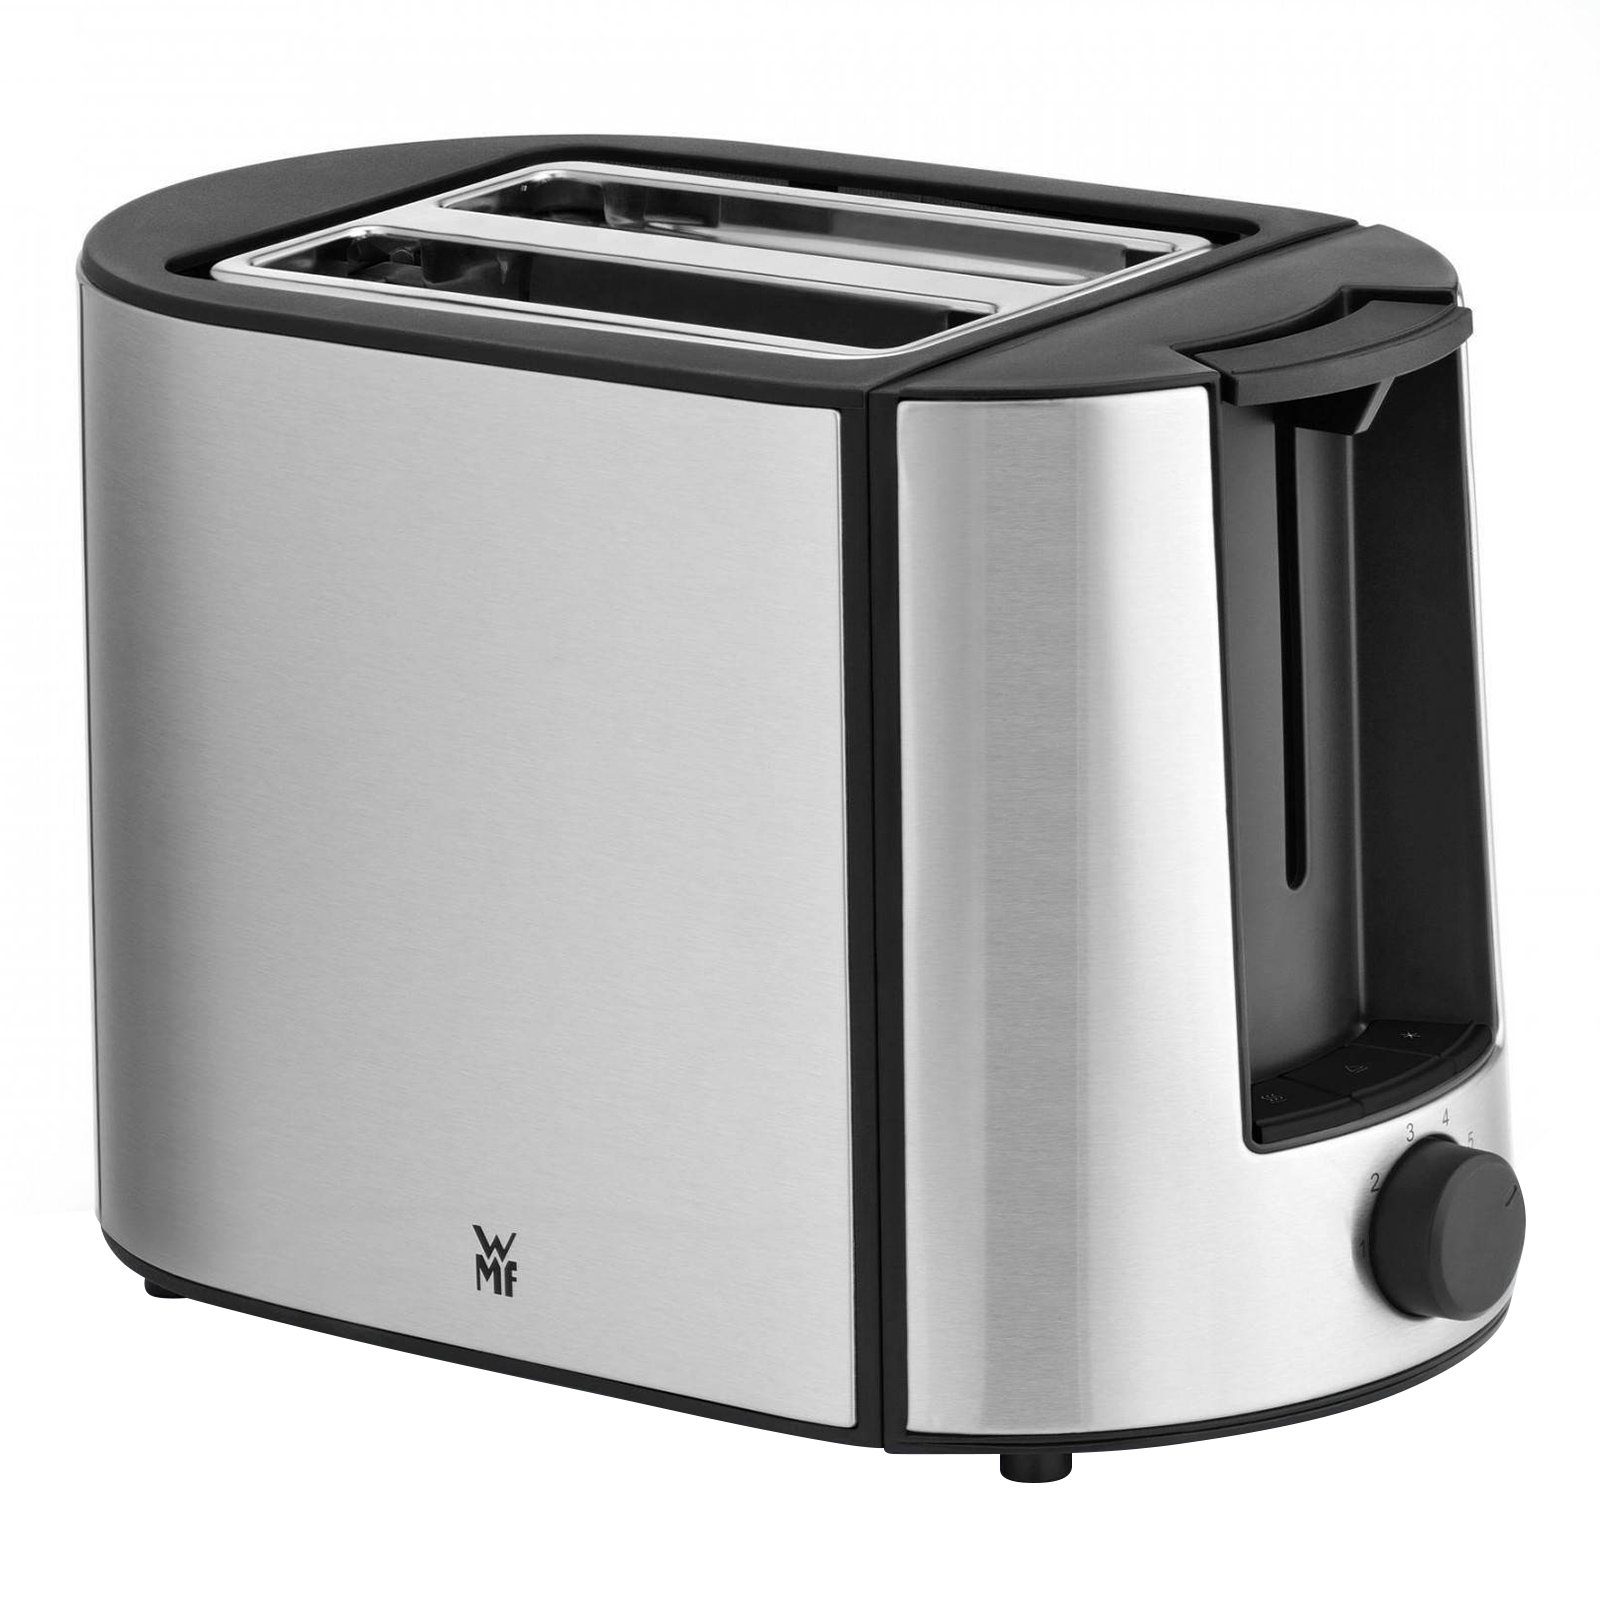 730 WMF Toaster Bueno W Pro,